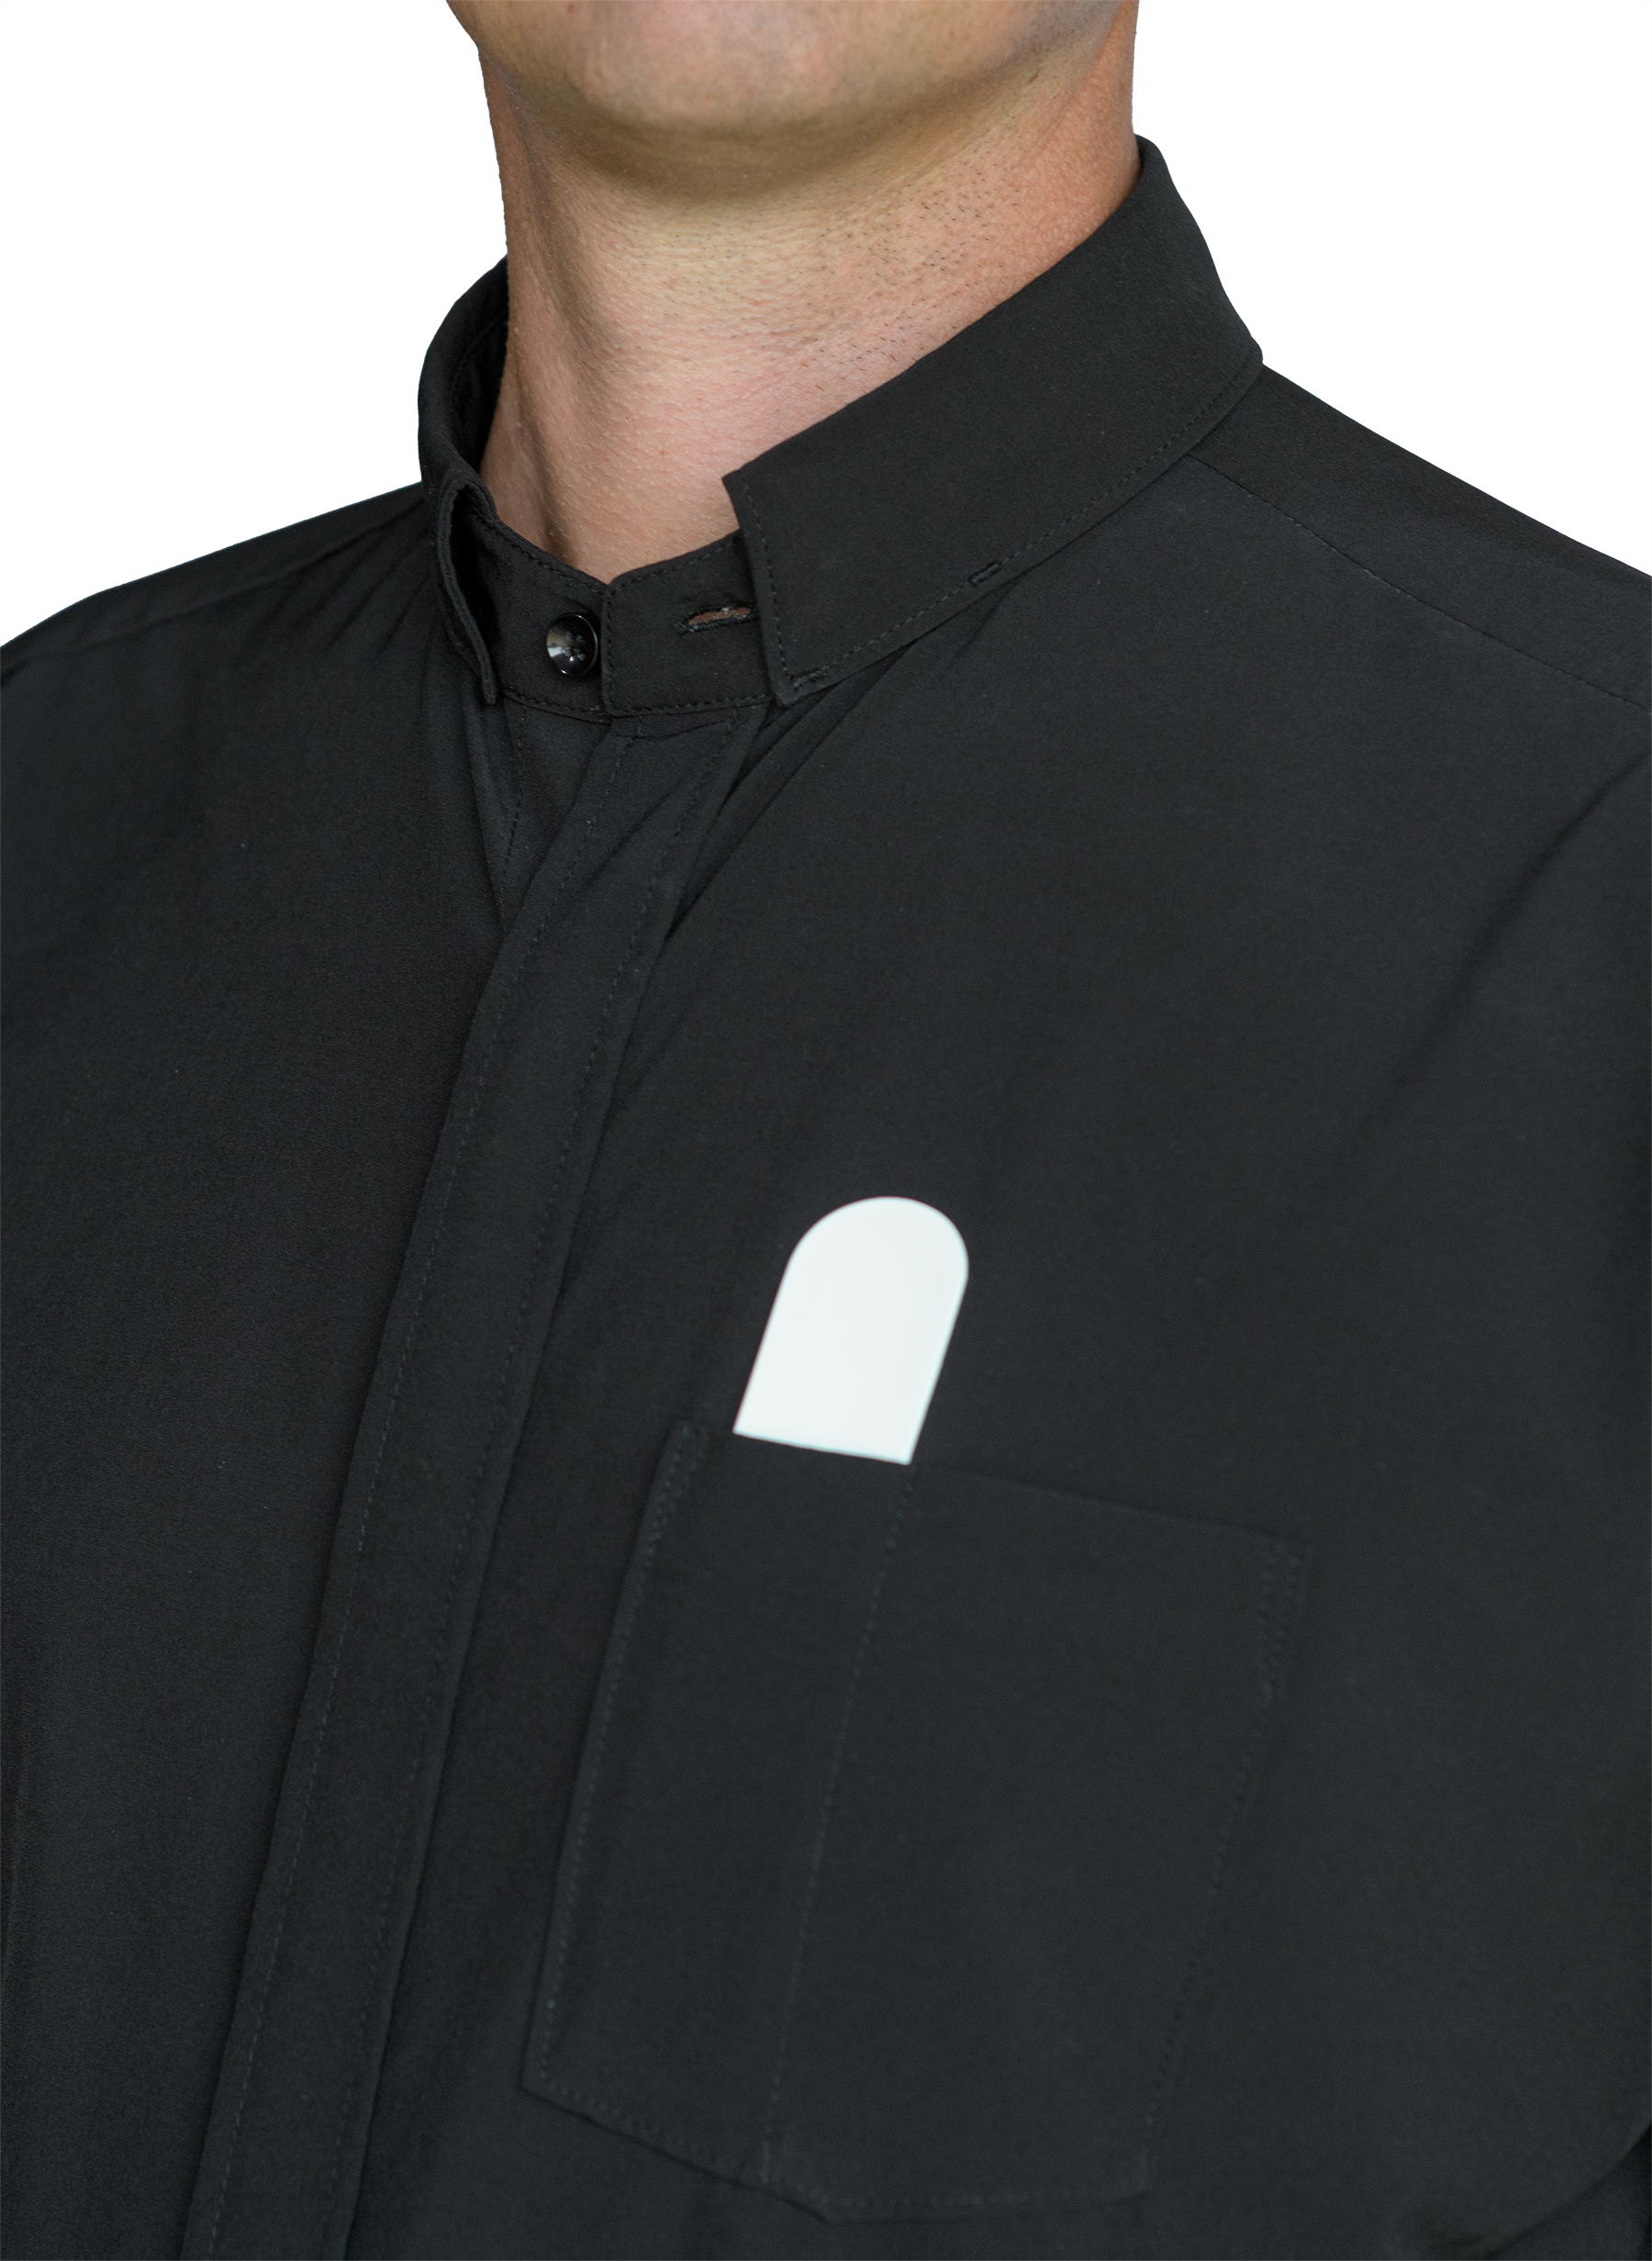 The Performance Clergy Shirt - Short Sleeve - Wicking Vicar